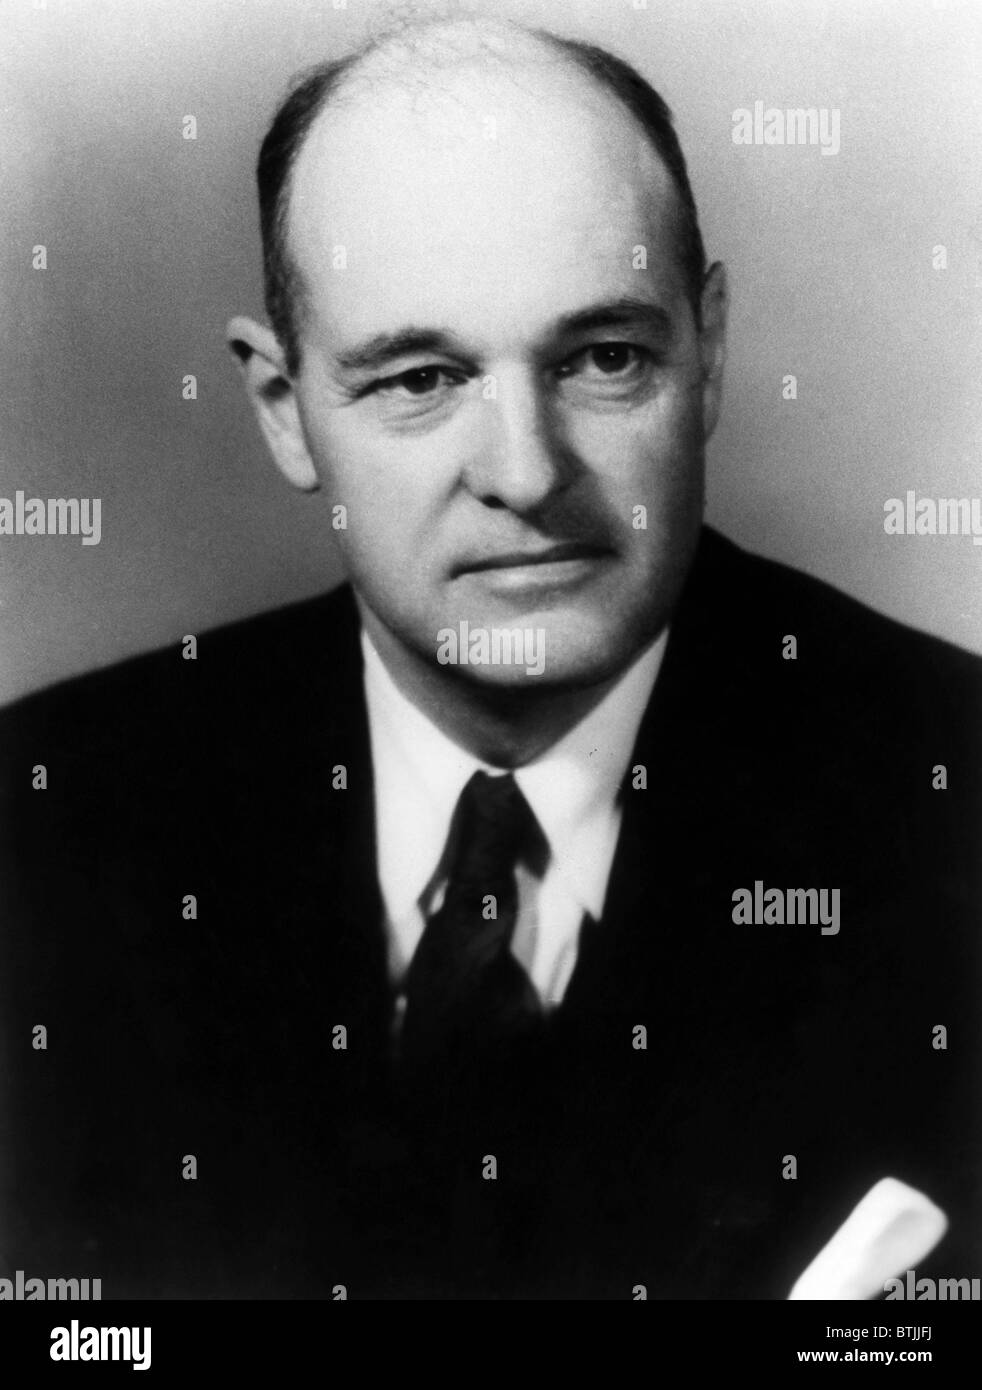 George F. Kennan (1904-2005), American diplomat, advisor, historian, and political scientist, c. 1940's. Stock Photo